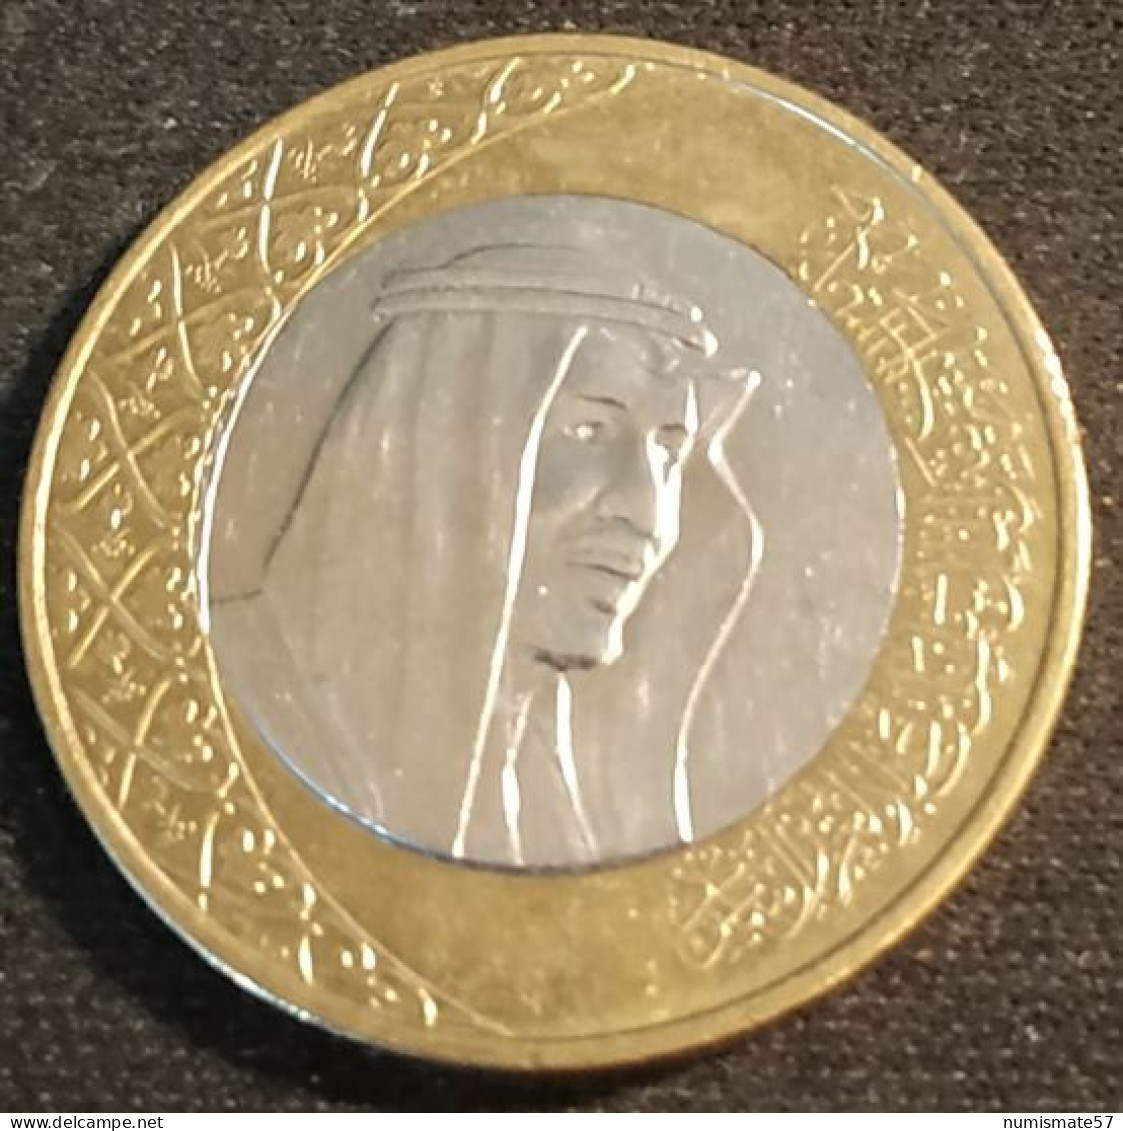 2 dollars 1993 - Bermudan Coinage, Bermuda - Coin value - uCoin.net